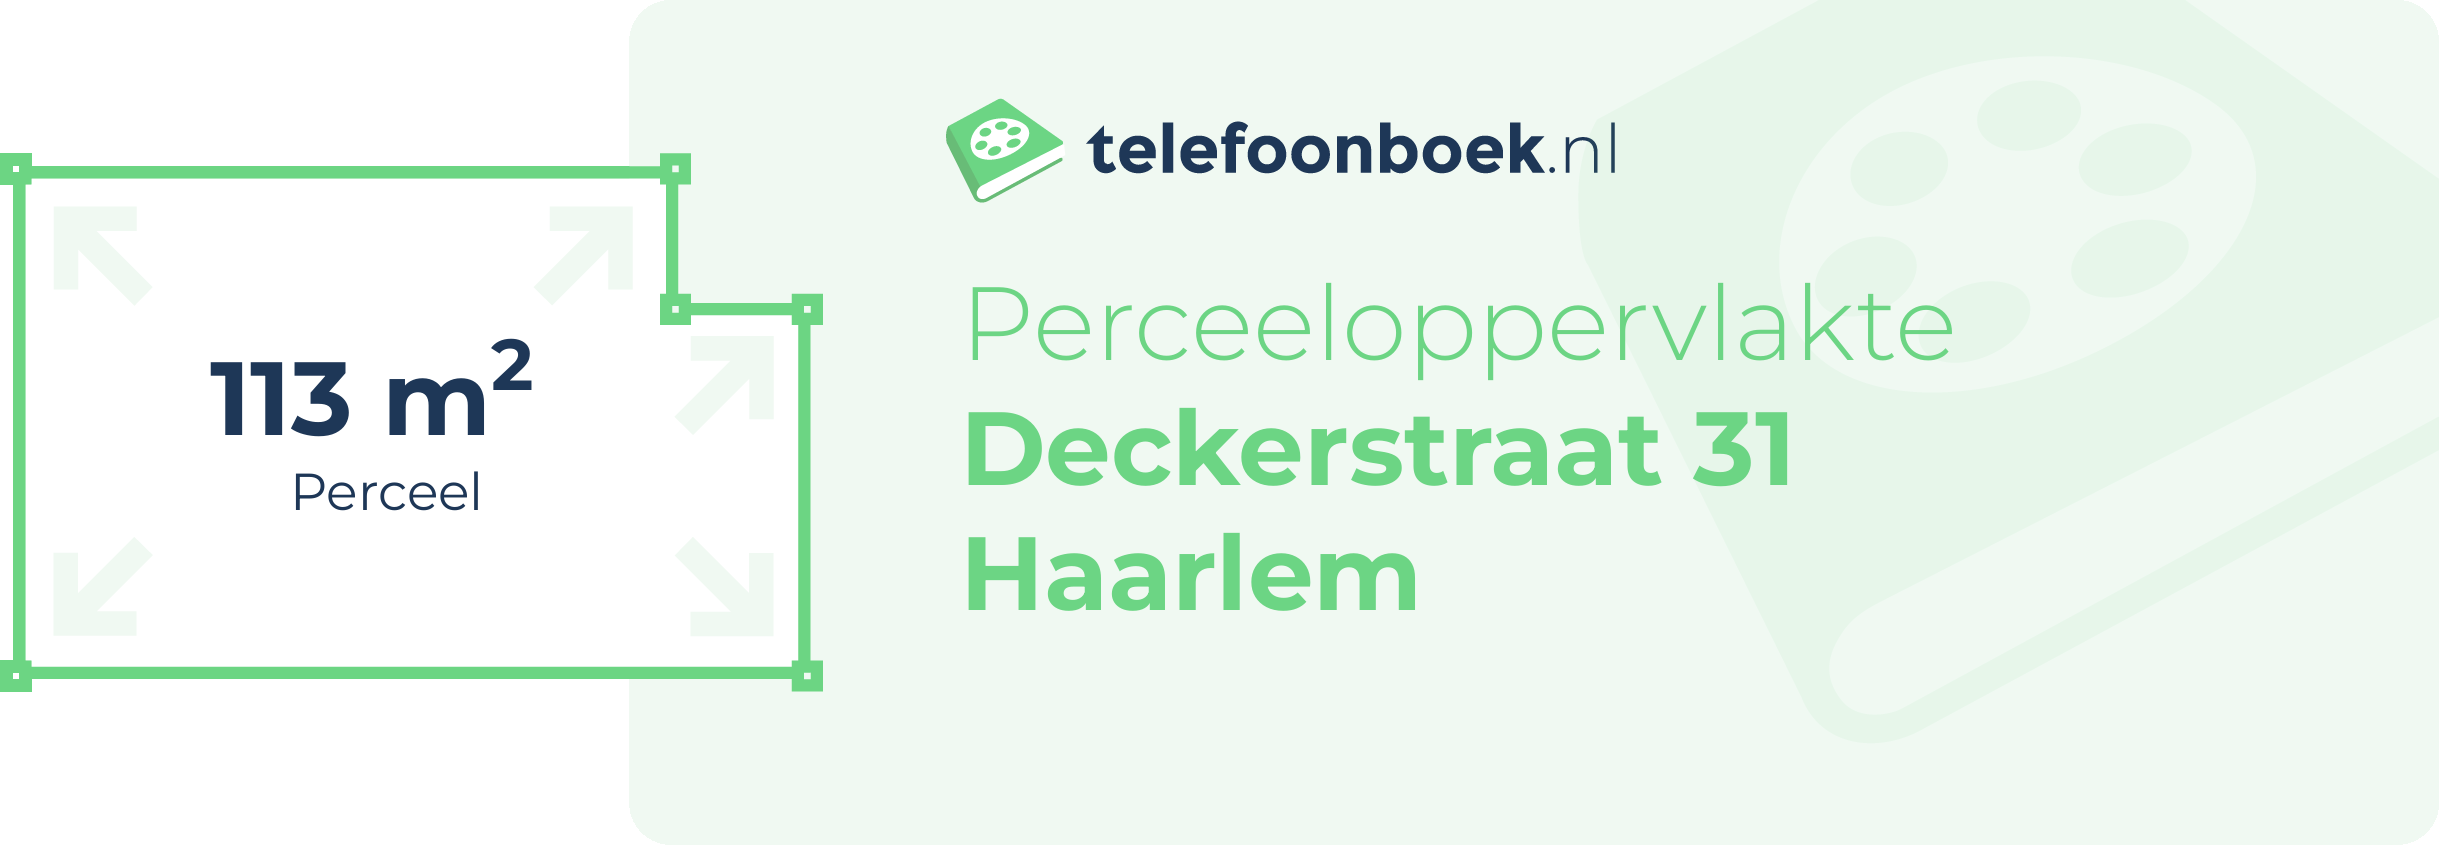 Perceeloppervlakte Deckerstraat 31 Haarlem